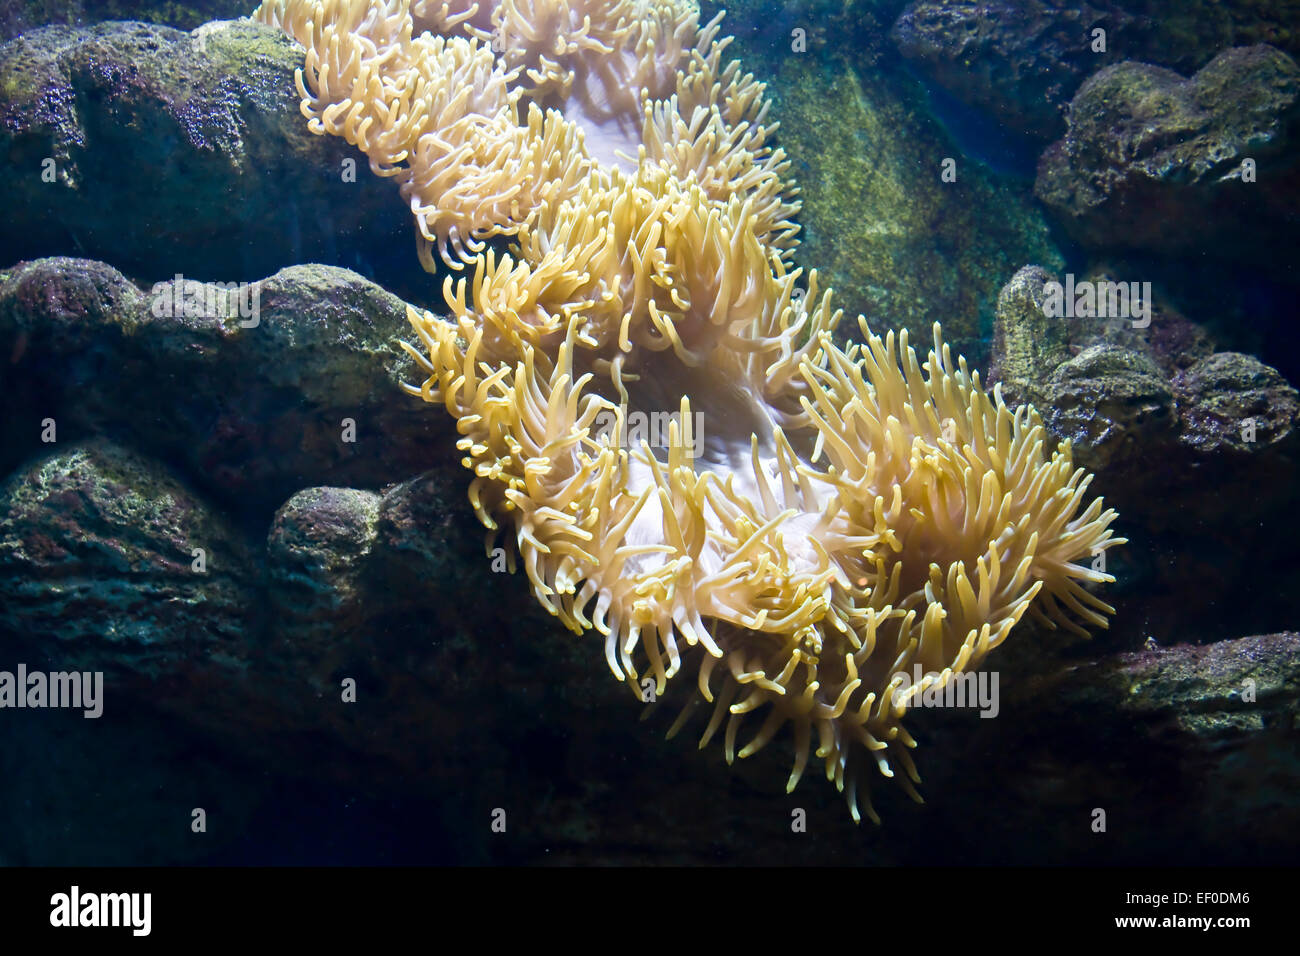 Actinia (sea anemona) under water, stones around. Stock Photo